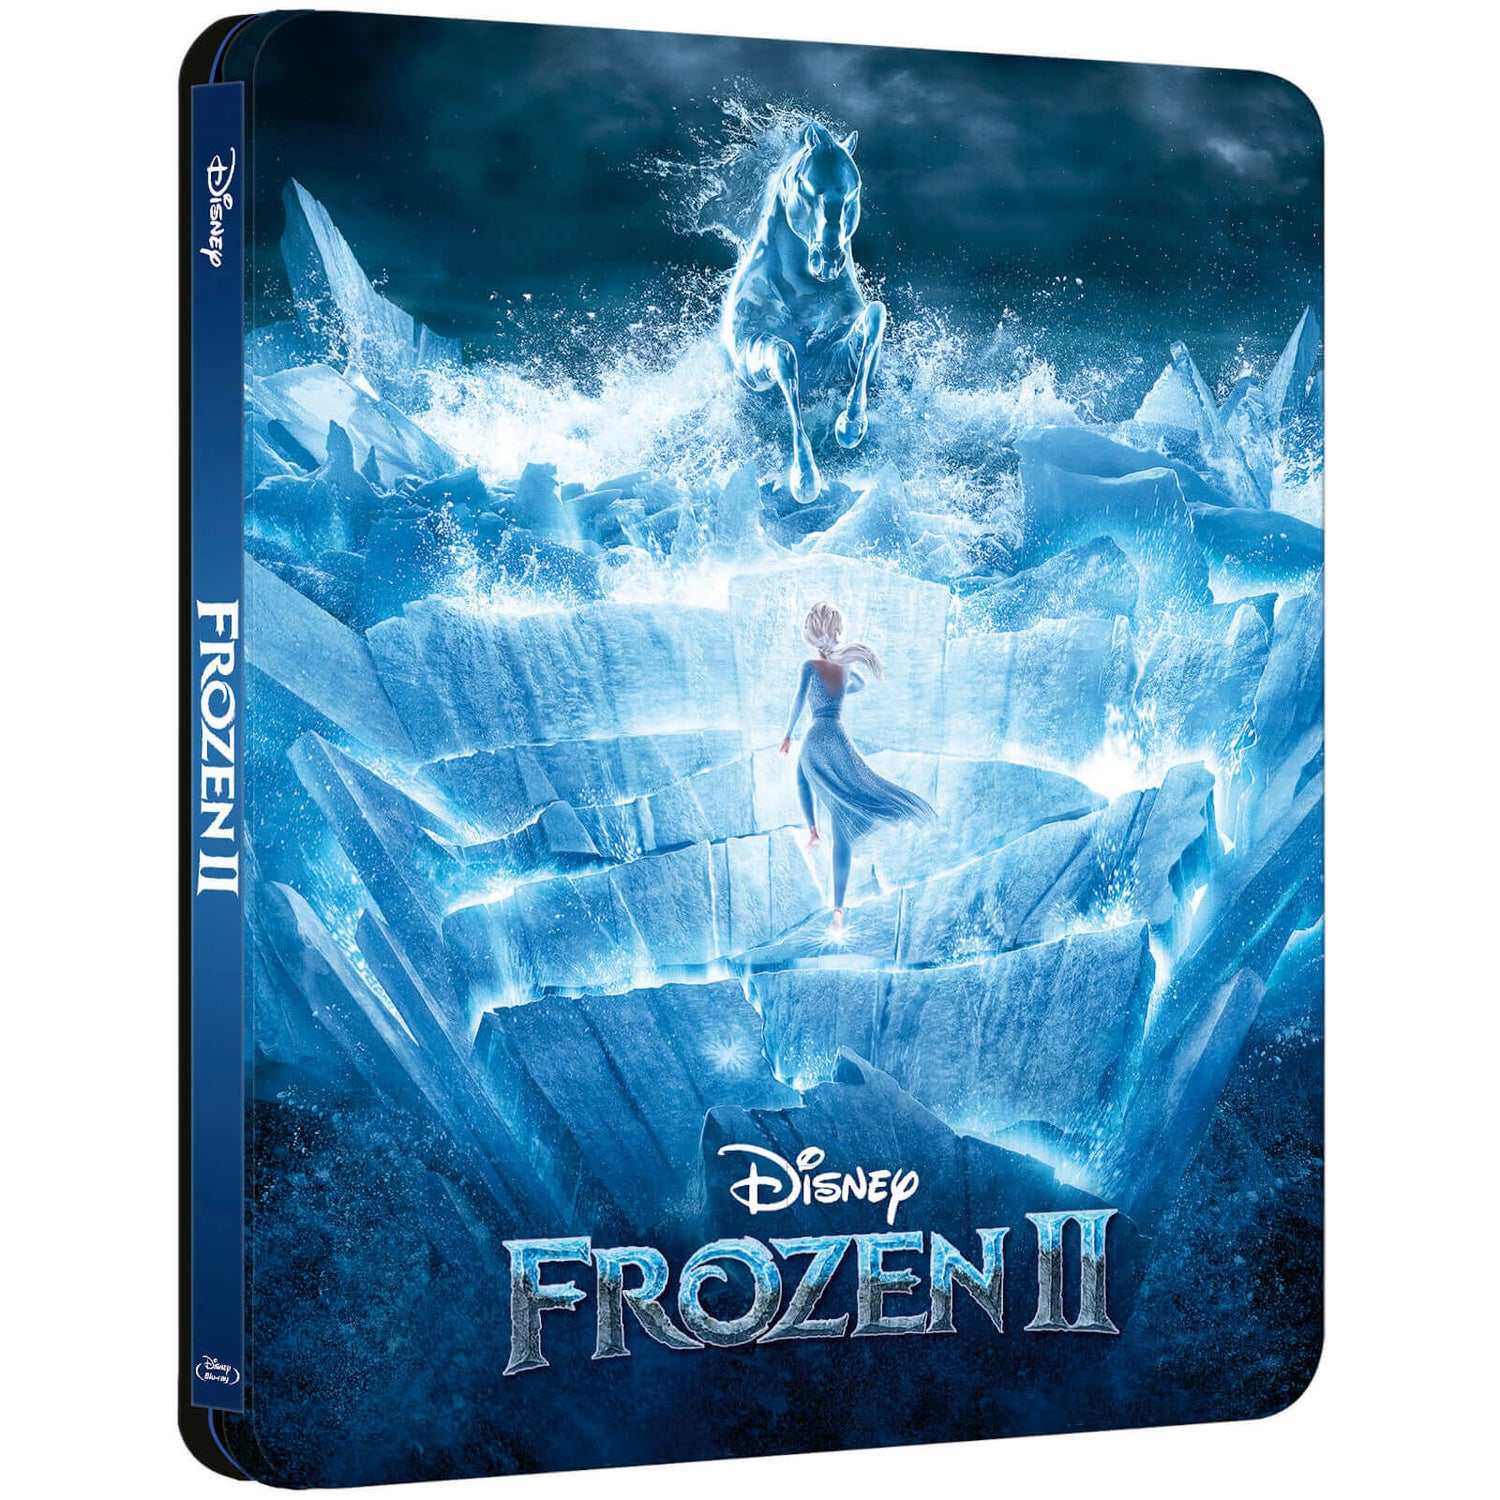 Disney’s Frozen 2 – 3D Zavvi Exclusive Steelbook (Includes 2D Blu-ray)